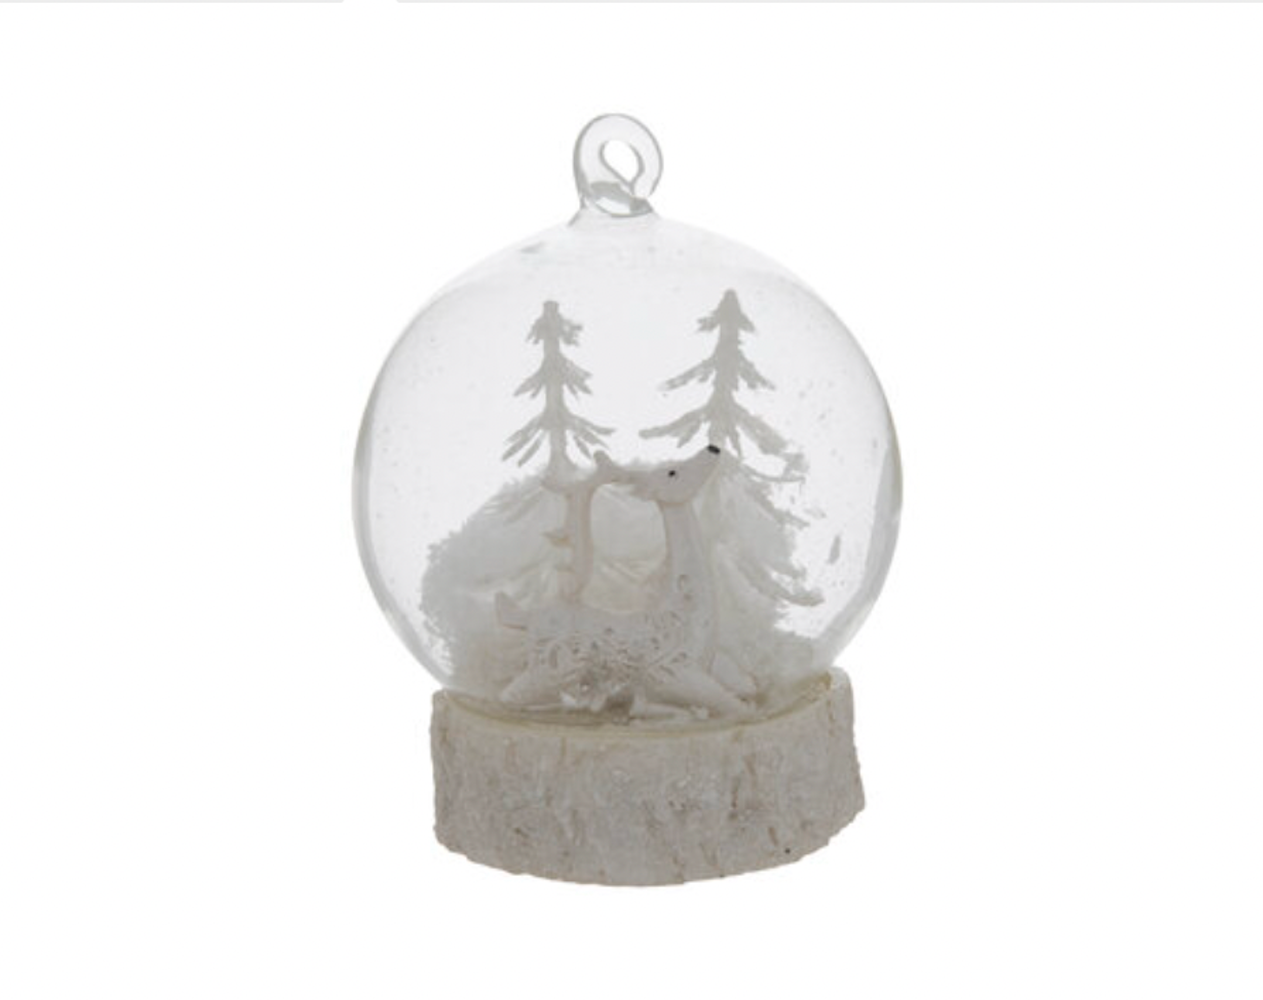 Robert Stanley 2021 Led White Deer Snow Globe Glass Christmas Ornament New w Tag